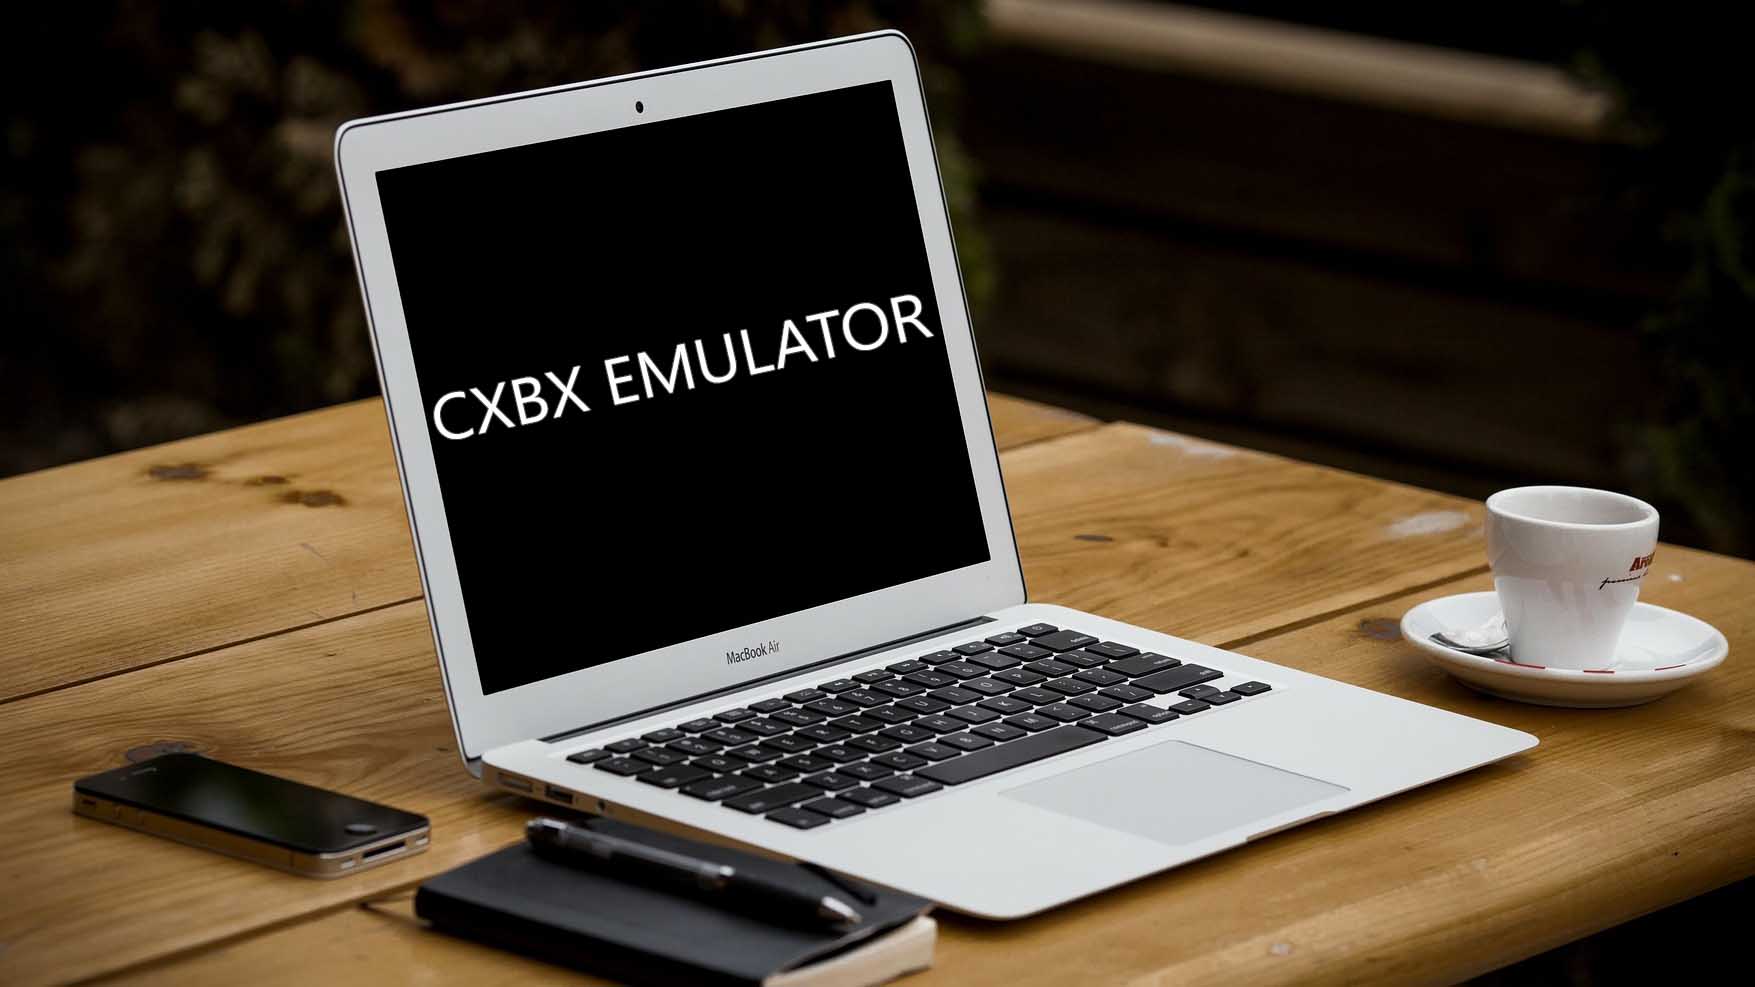 xbox 360 emulator cxbx